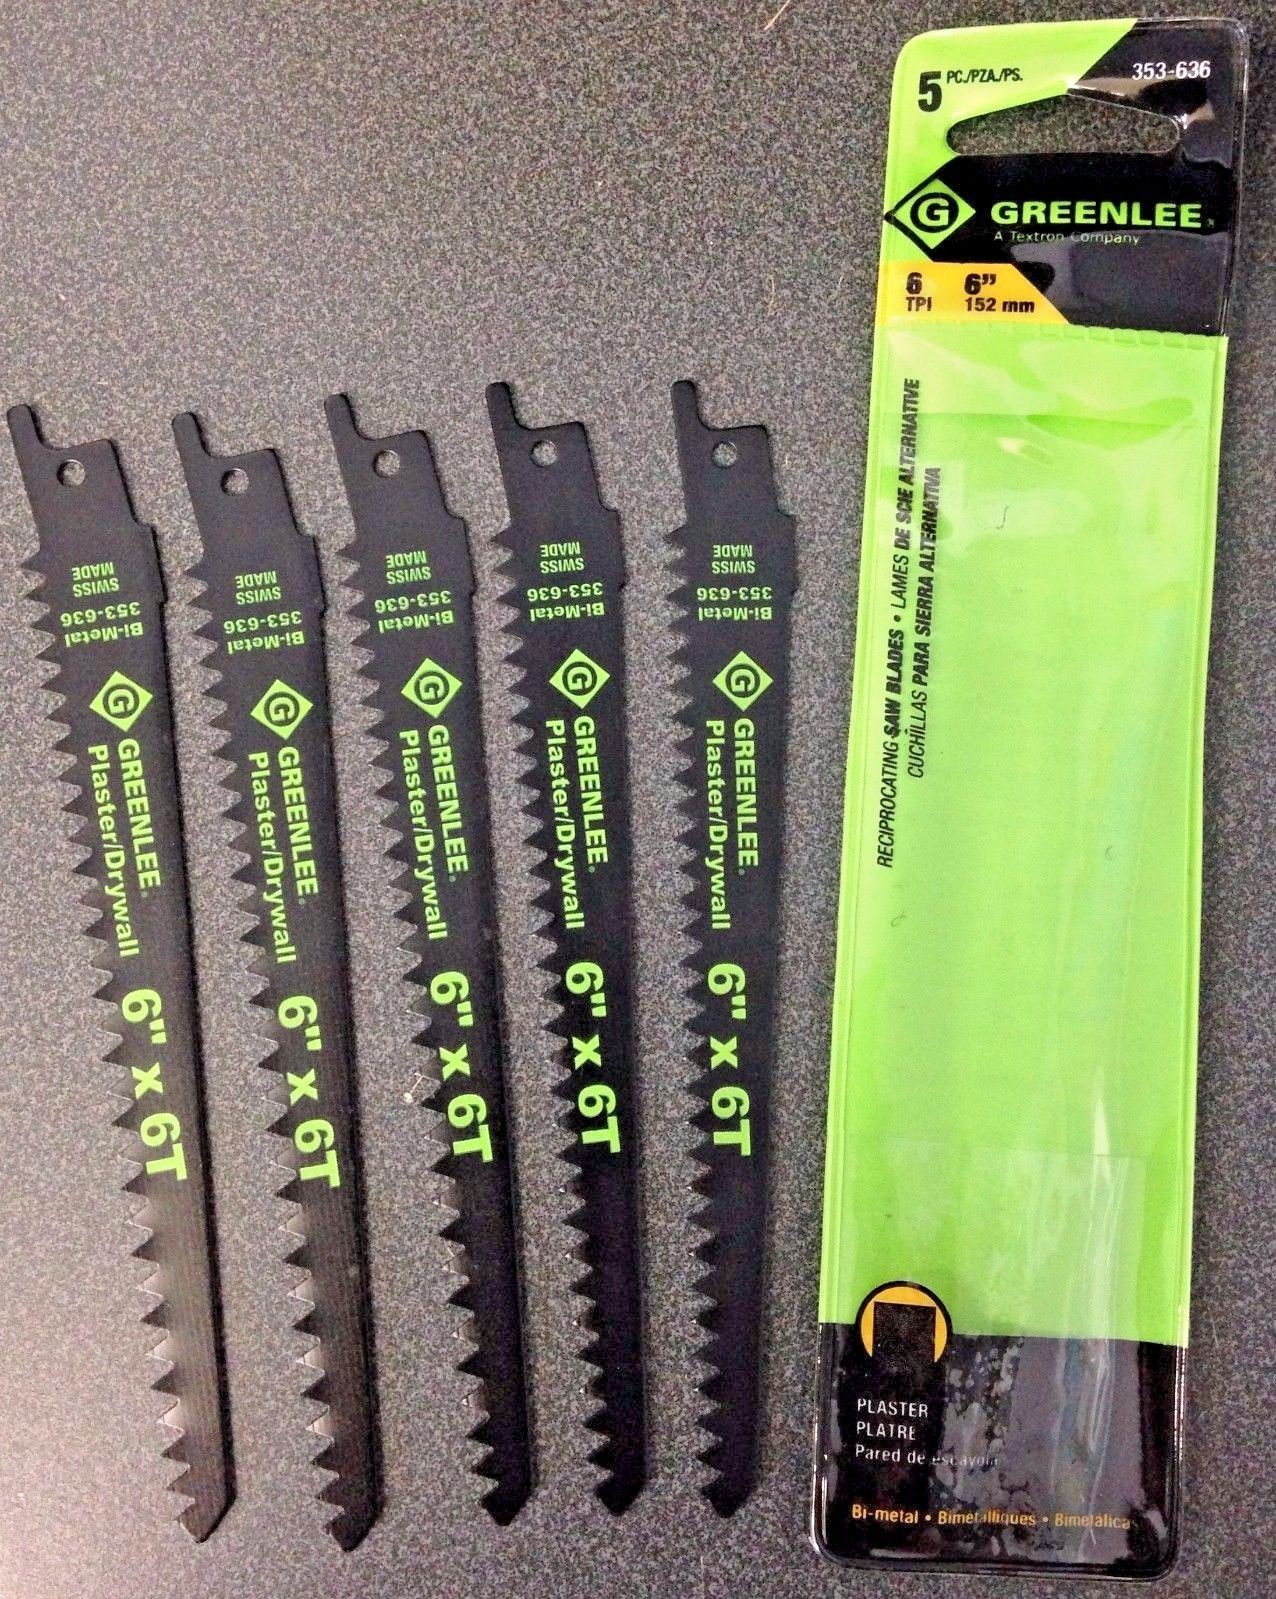 Greenlee 353-636 6" x 6 TPI Bi-Metal Drywall Cutting Reciprocating Saw Blade 5PK